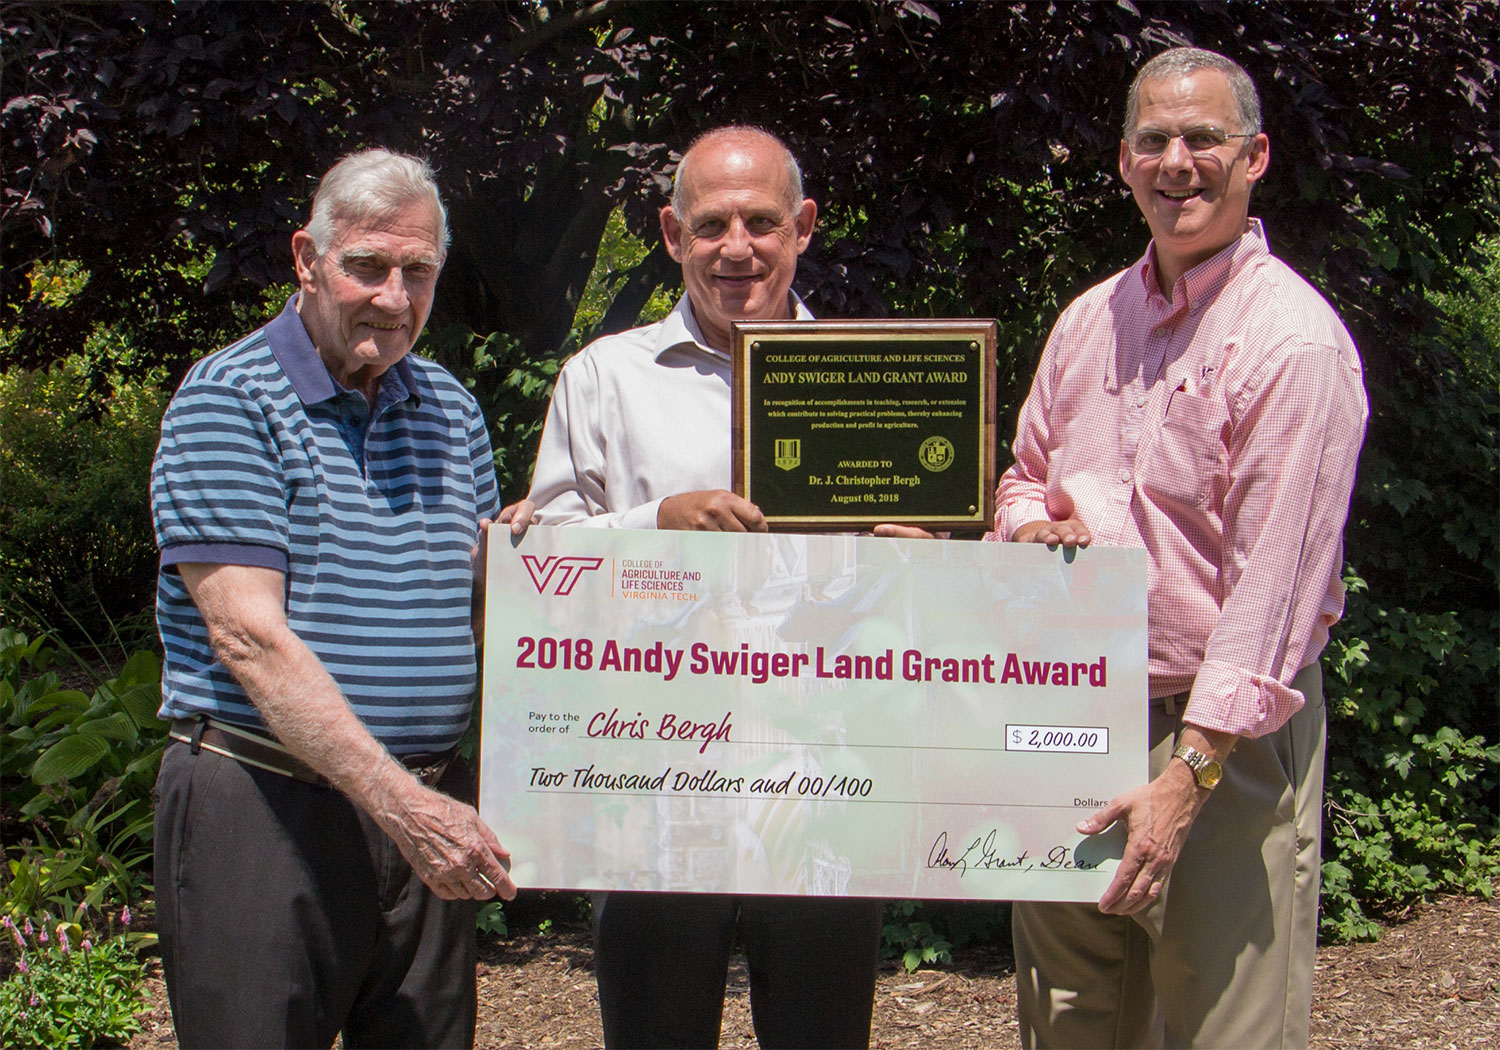 Andy Swiger Land-Grant Award winner J. Christopher Bergh